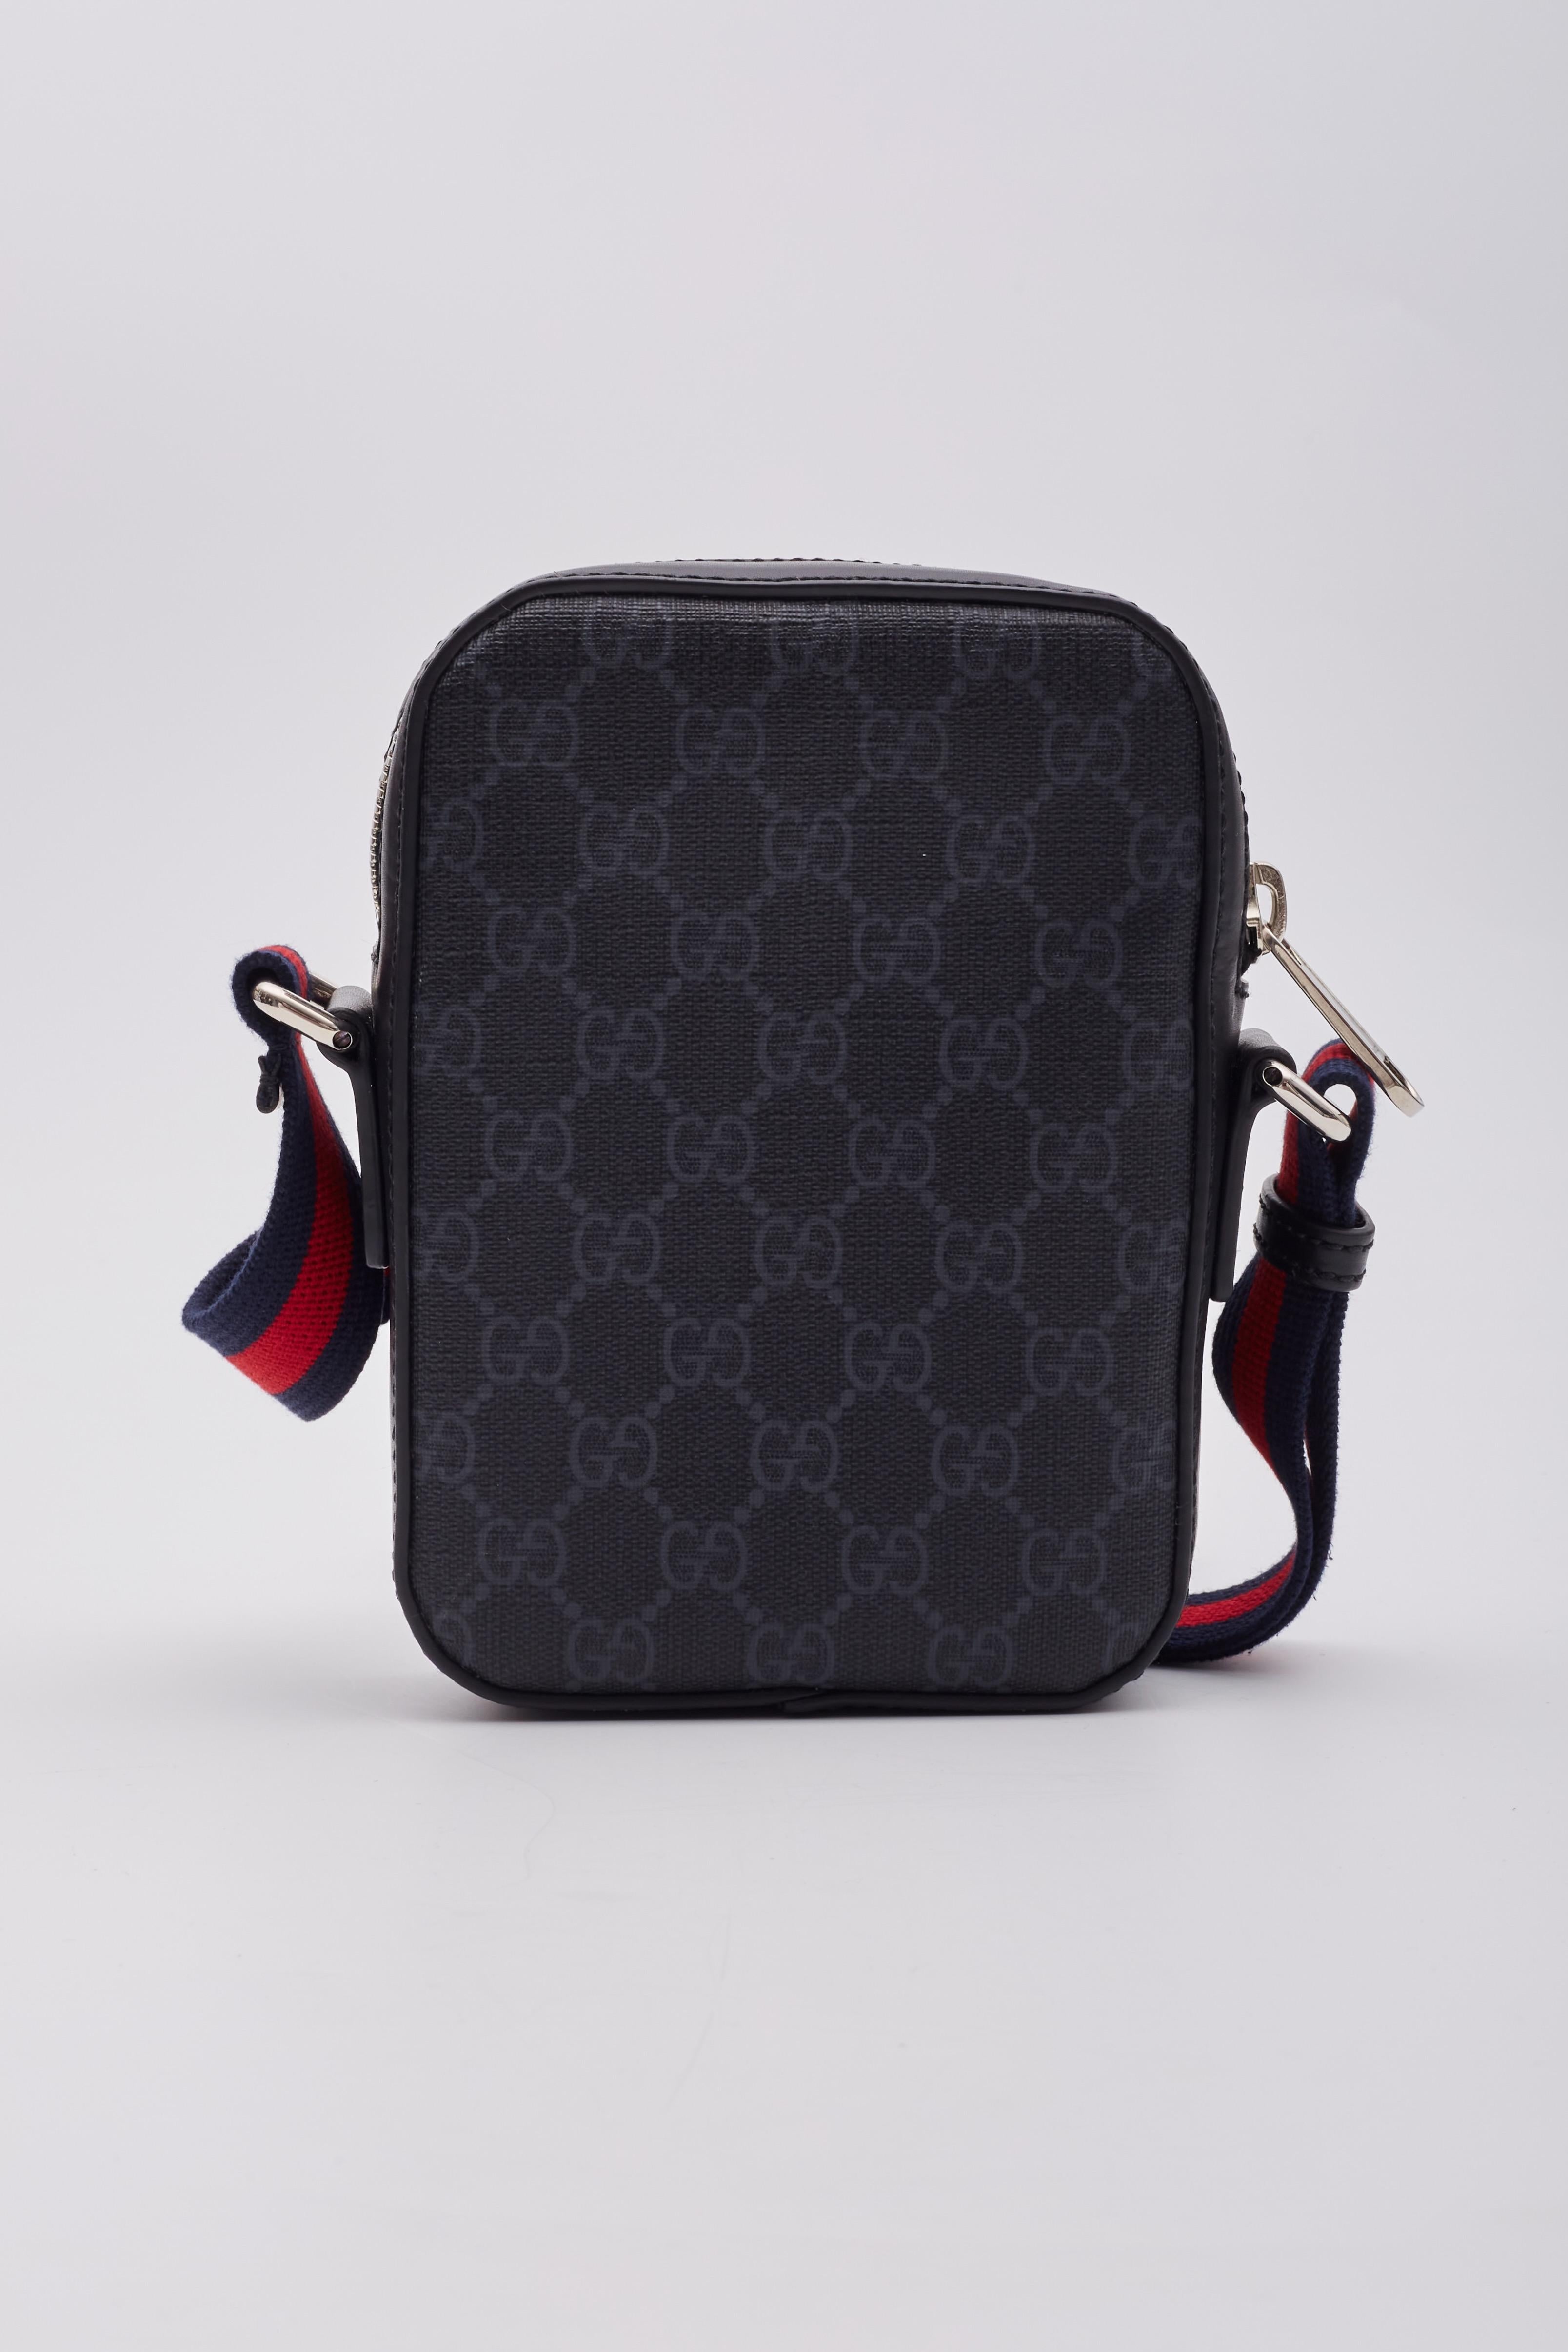 Gucci GG Supreme Monogram Web Messenger Bag Noir Unisexe en vente